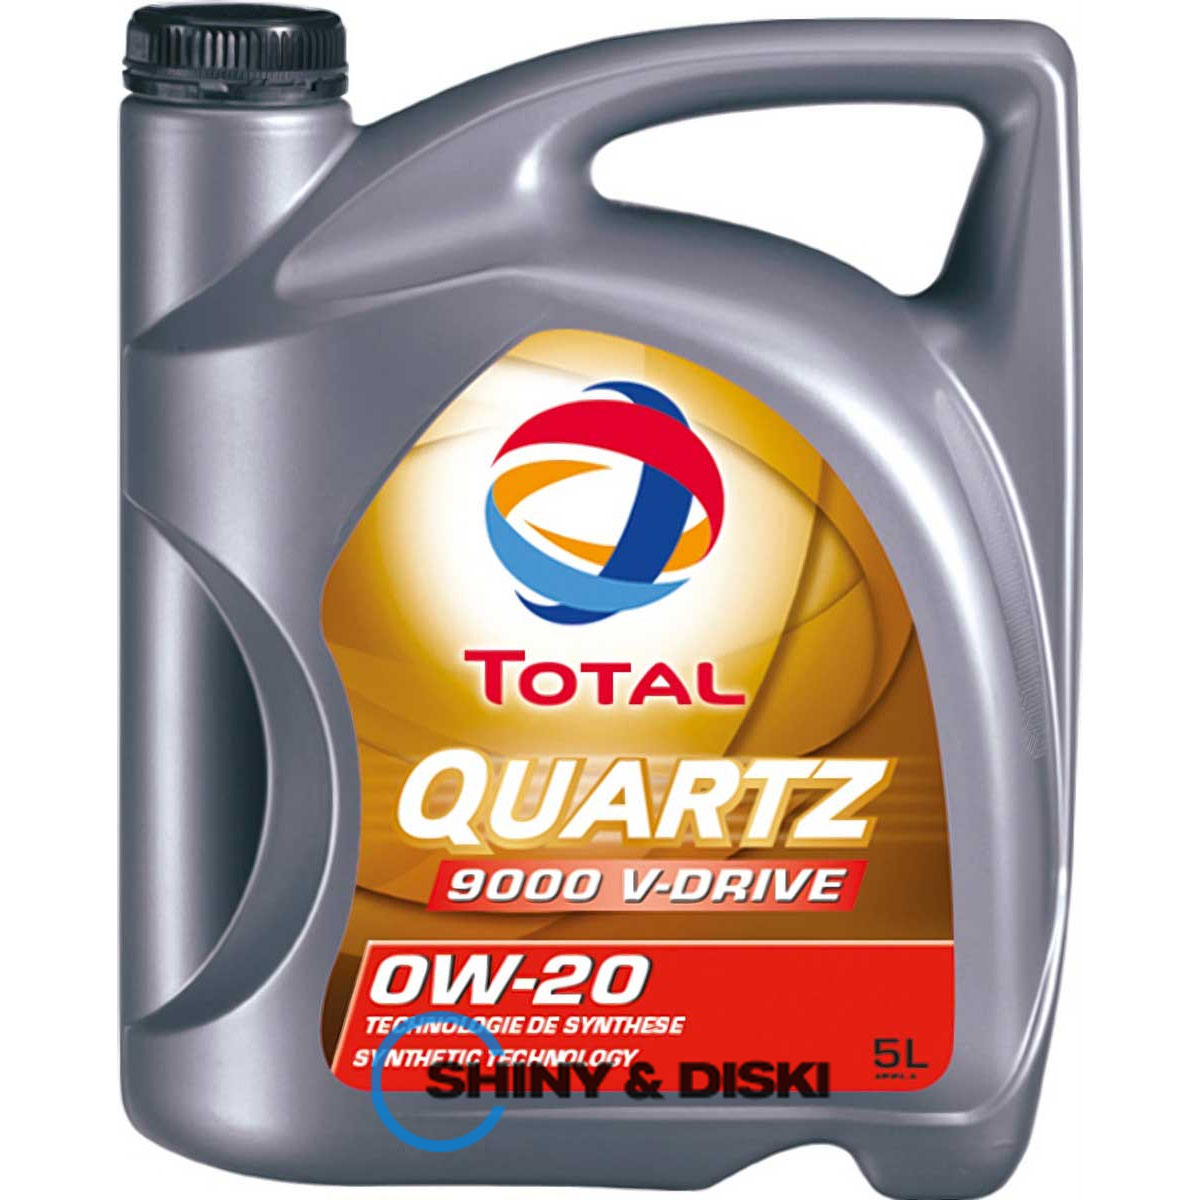 total quartz 9000 v-drive